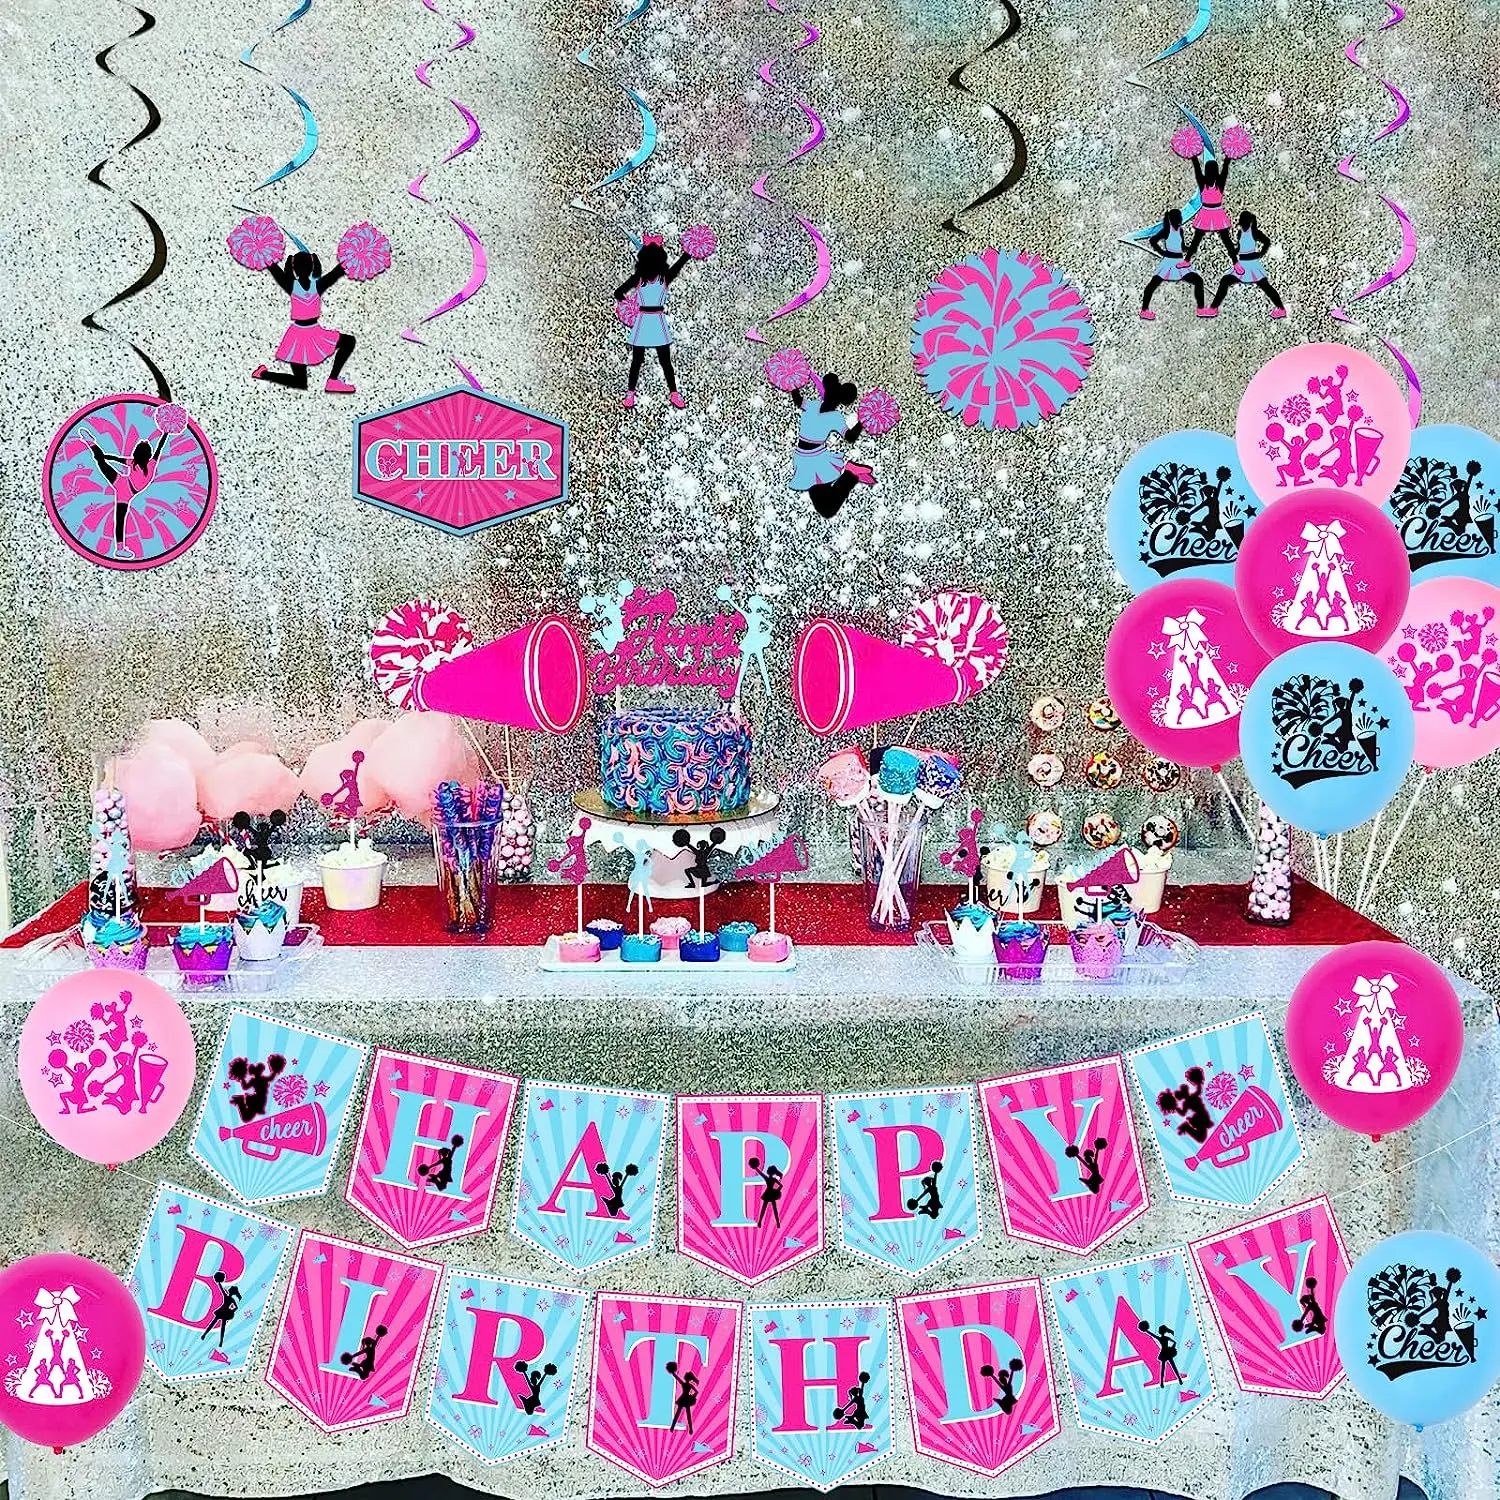 Cheerleading Theme Birthday Party Decorations for Girls Hot Pink Blue Happy Birthday Banner Cheerleader Hanging Swirls Balloons